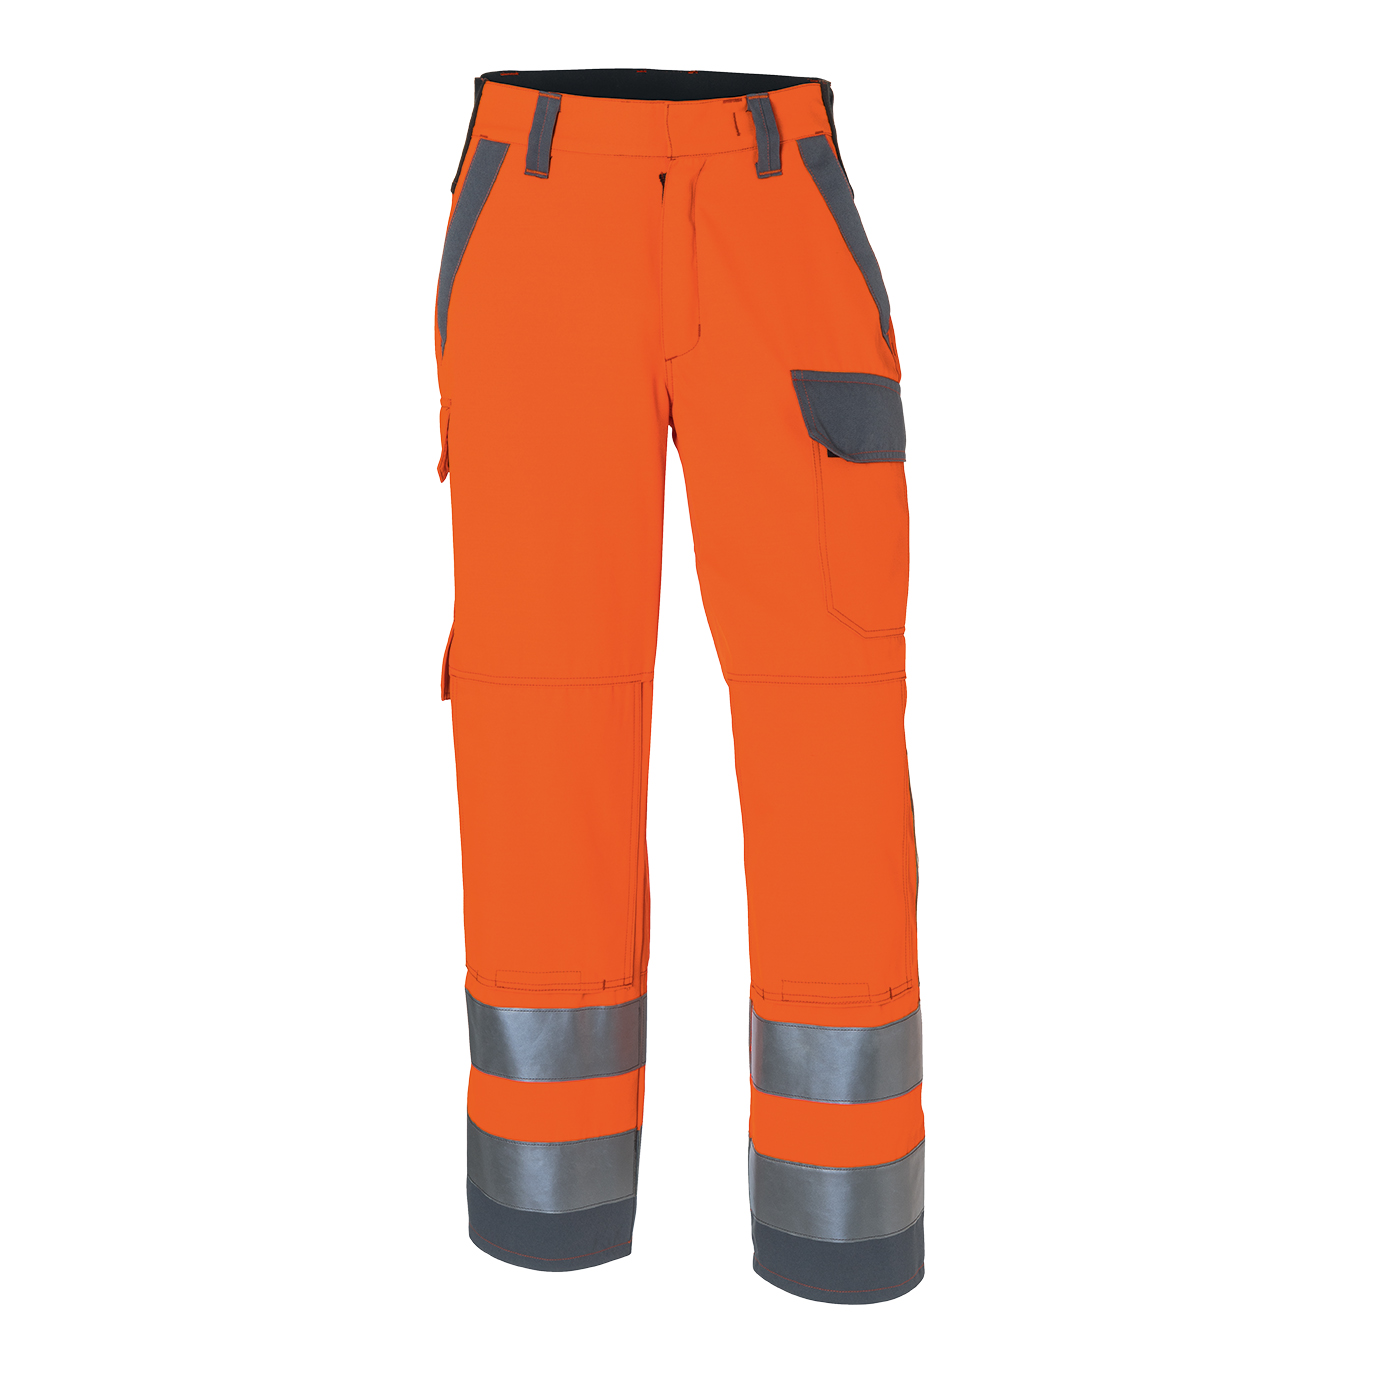 KÜBLER PROTECTIQ HIGH VIS spodnie arc2 PPE 3